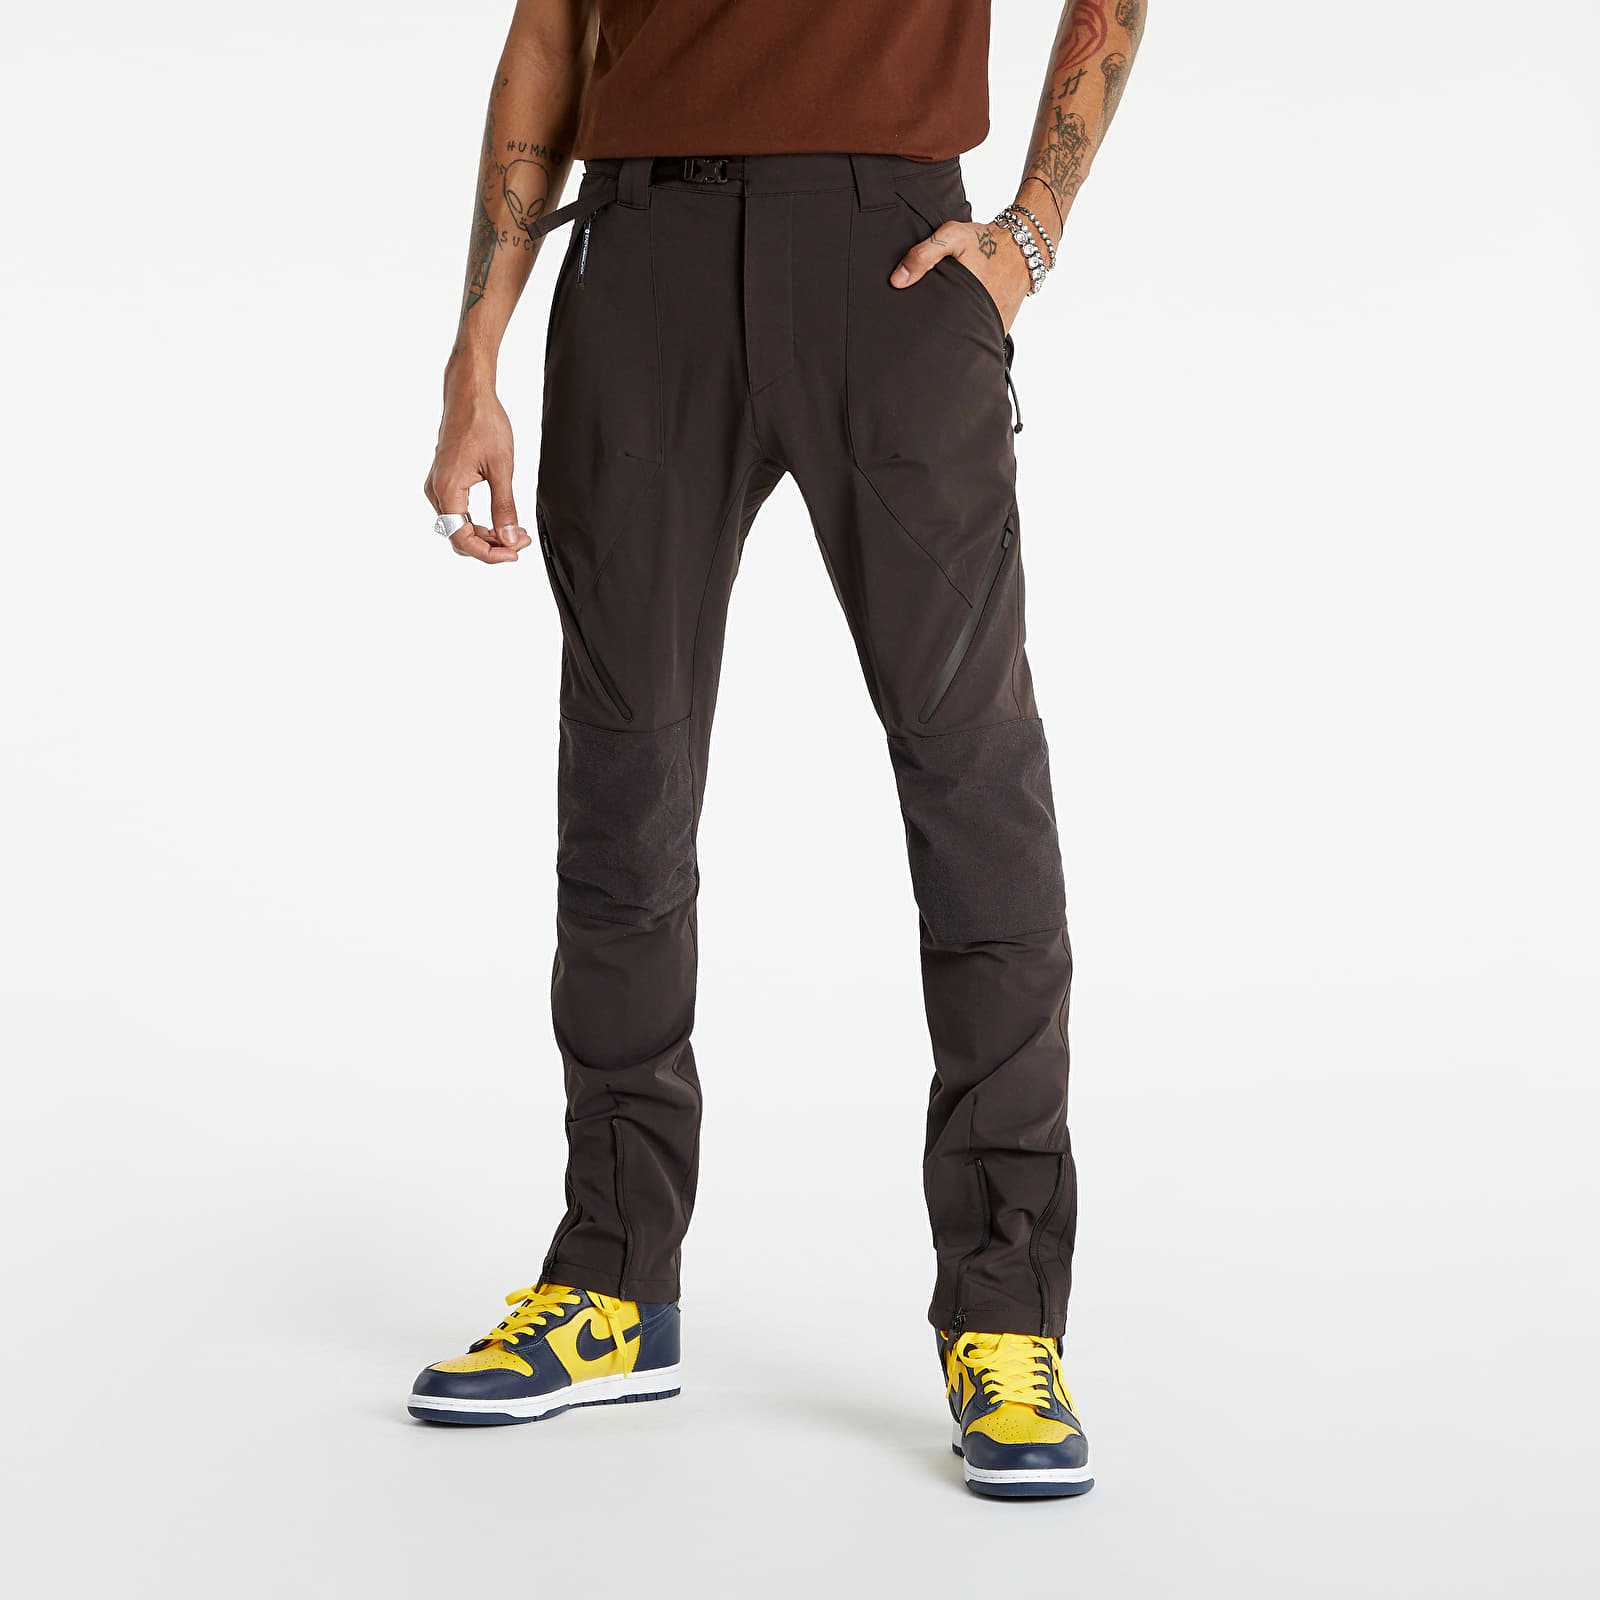 Spodnie Nike x CACT.US CORP Men's Woven Trousers Dark Brown